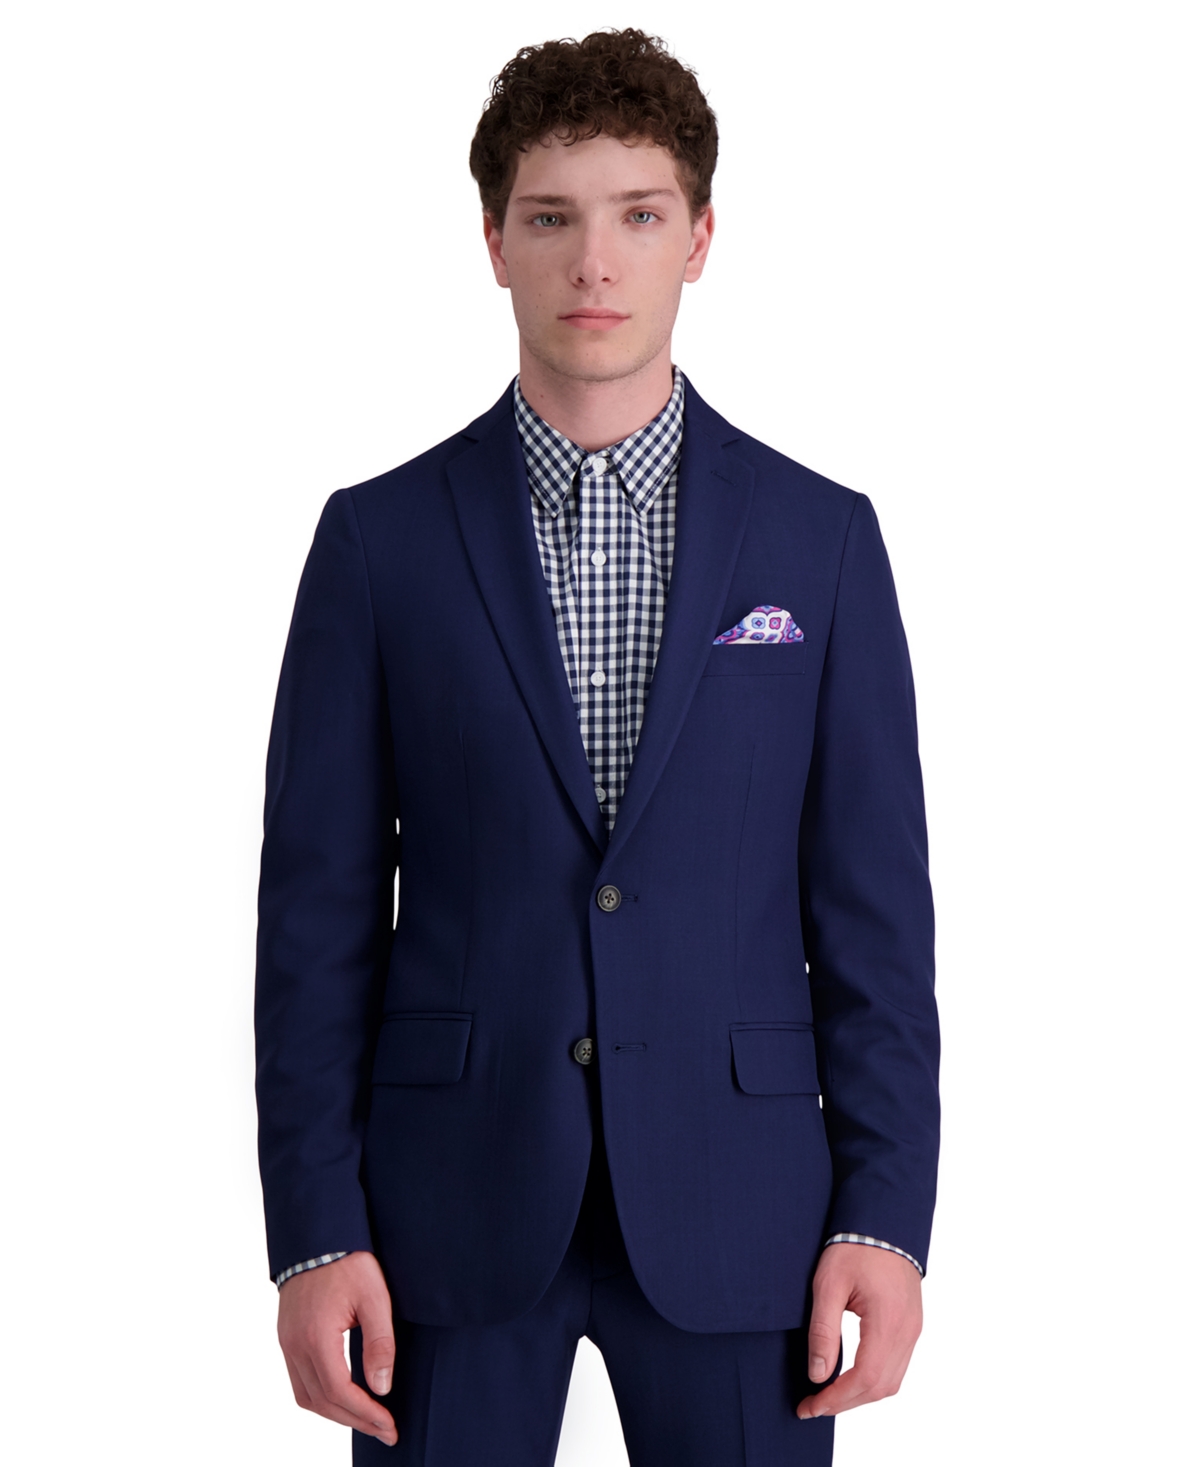 Men's Smart Wash Slim Fit Suit Separates Jackets - Midnight